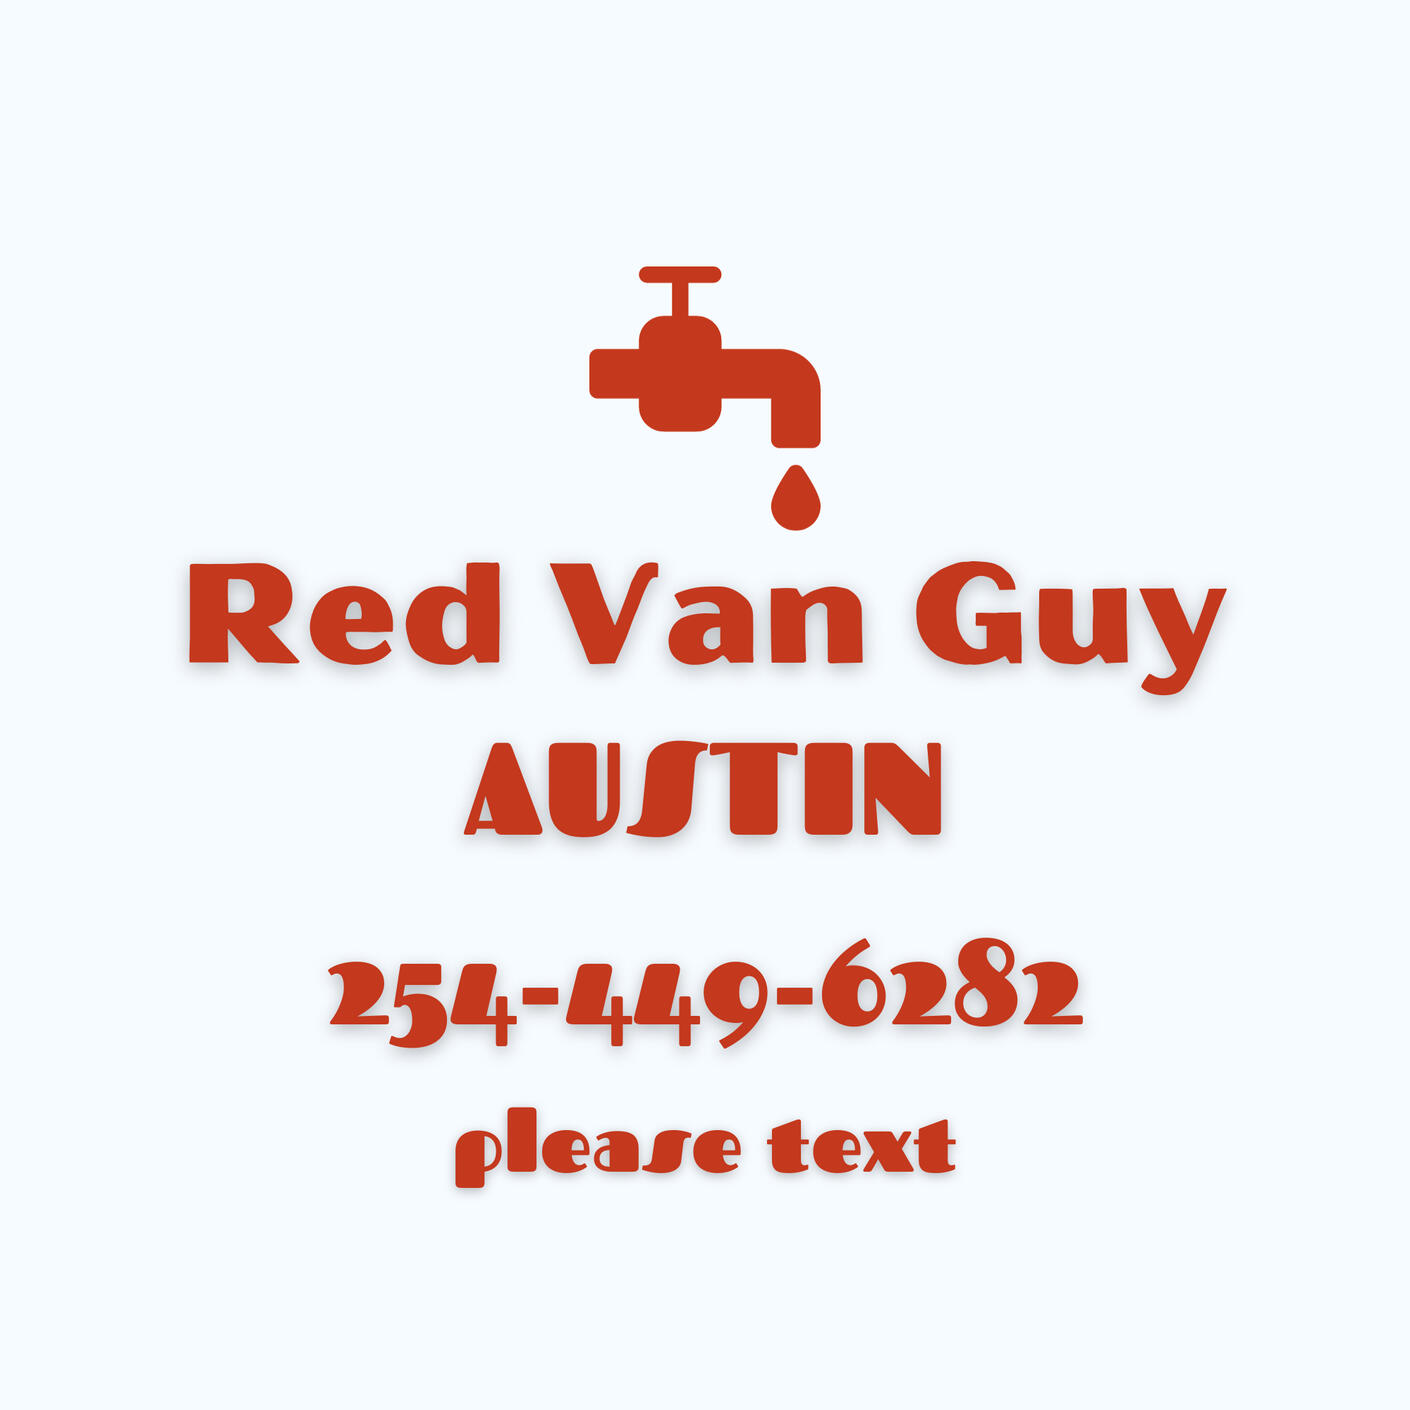 red van guy austin plumber handyman dennis trammell austin texas plumbing